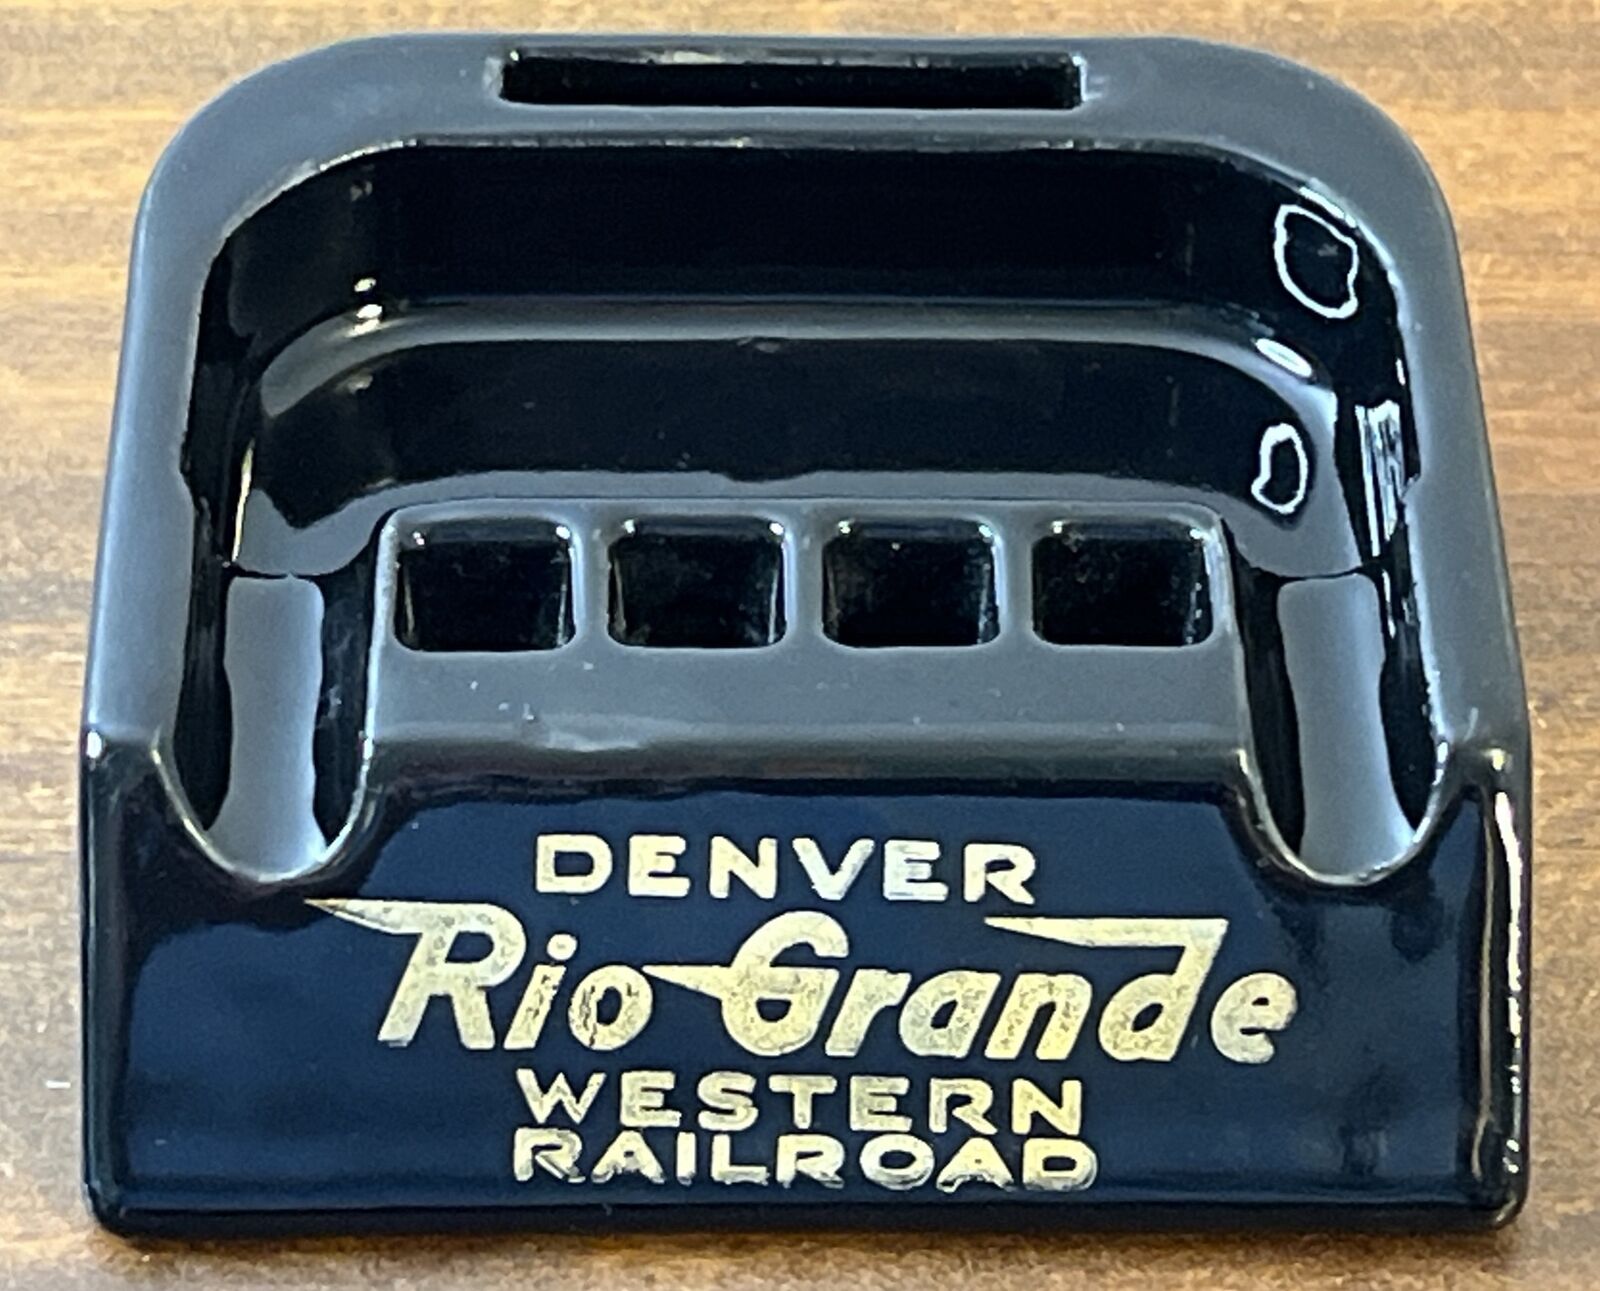 Vintage Rio Grande Western Railroad Ashtray D&RGW Porcelain Ceramic Snuf-A-Rette